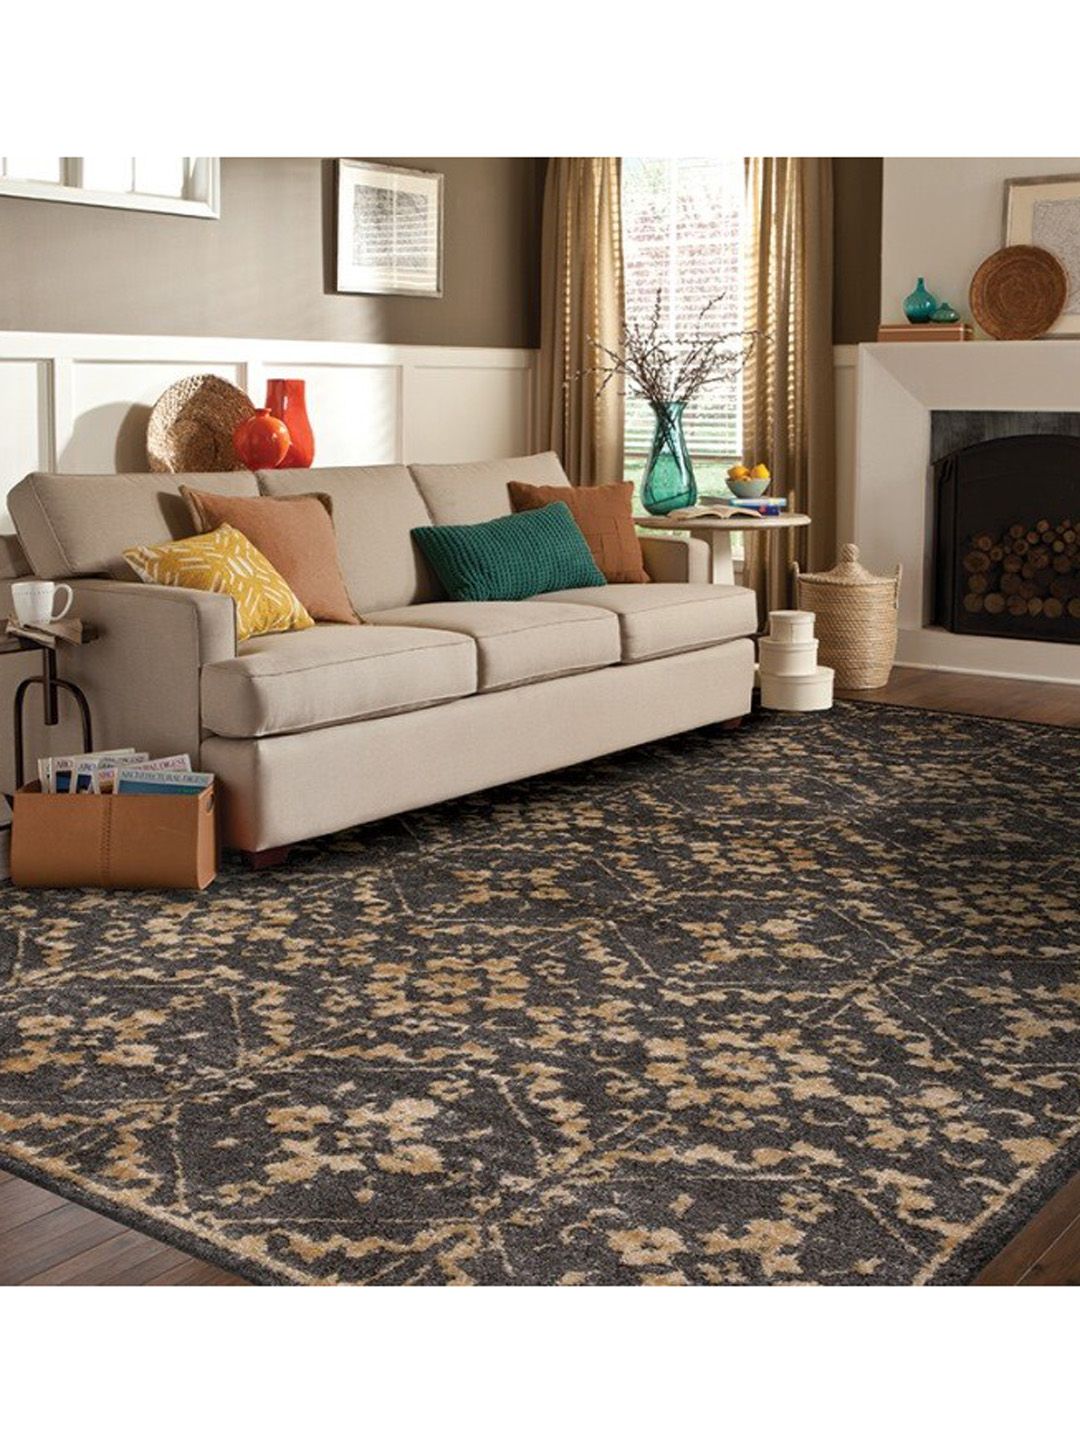 Ddecor Grey Ethnic Motifs Carpet Price in India